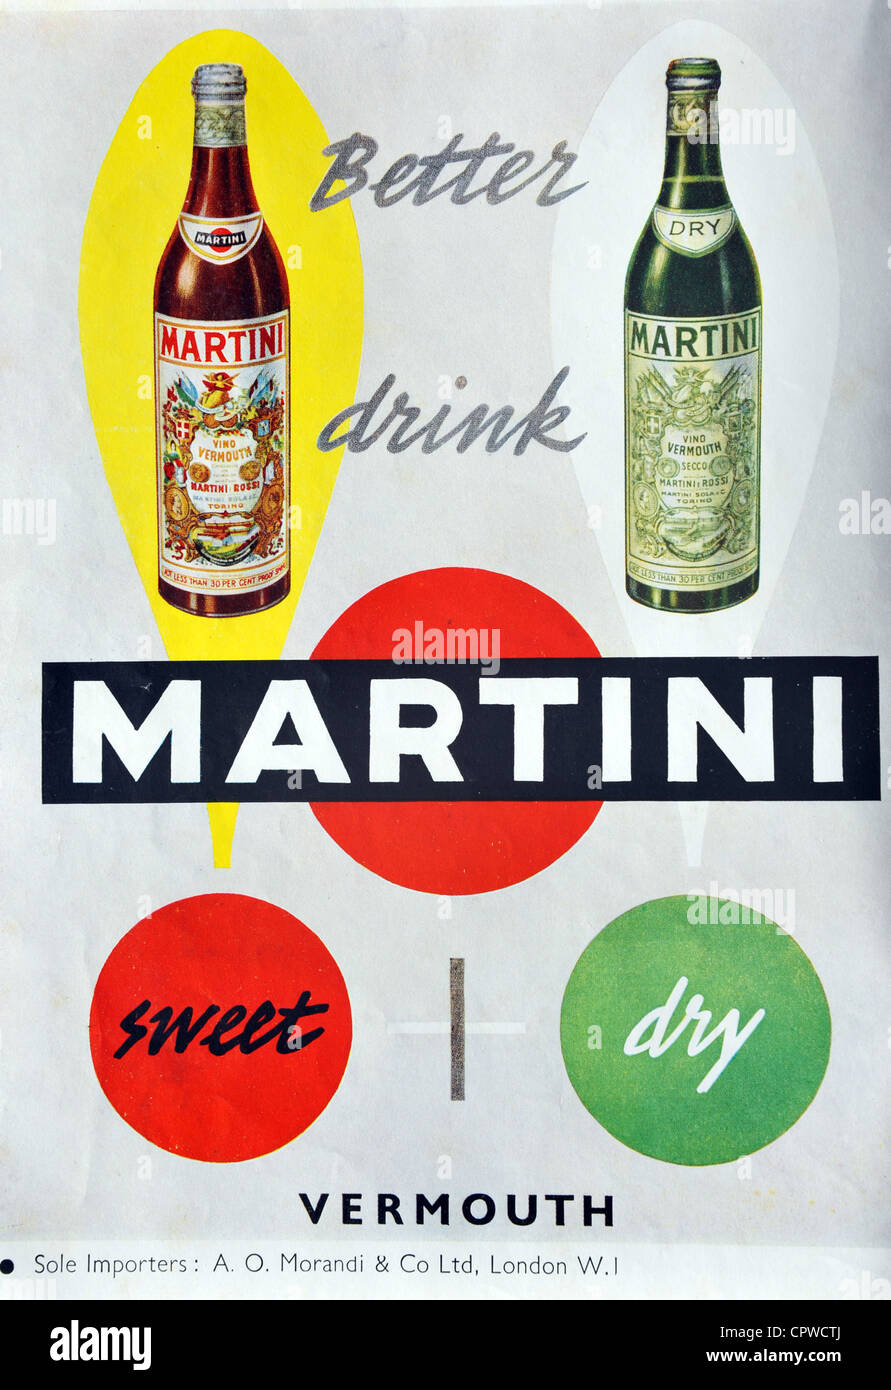 Martini drinks advert from 1953. Britain. Stock Photo